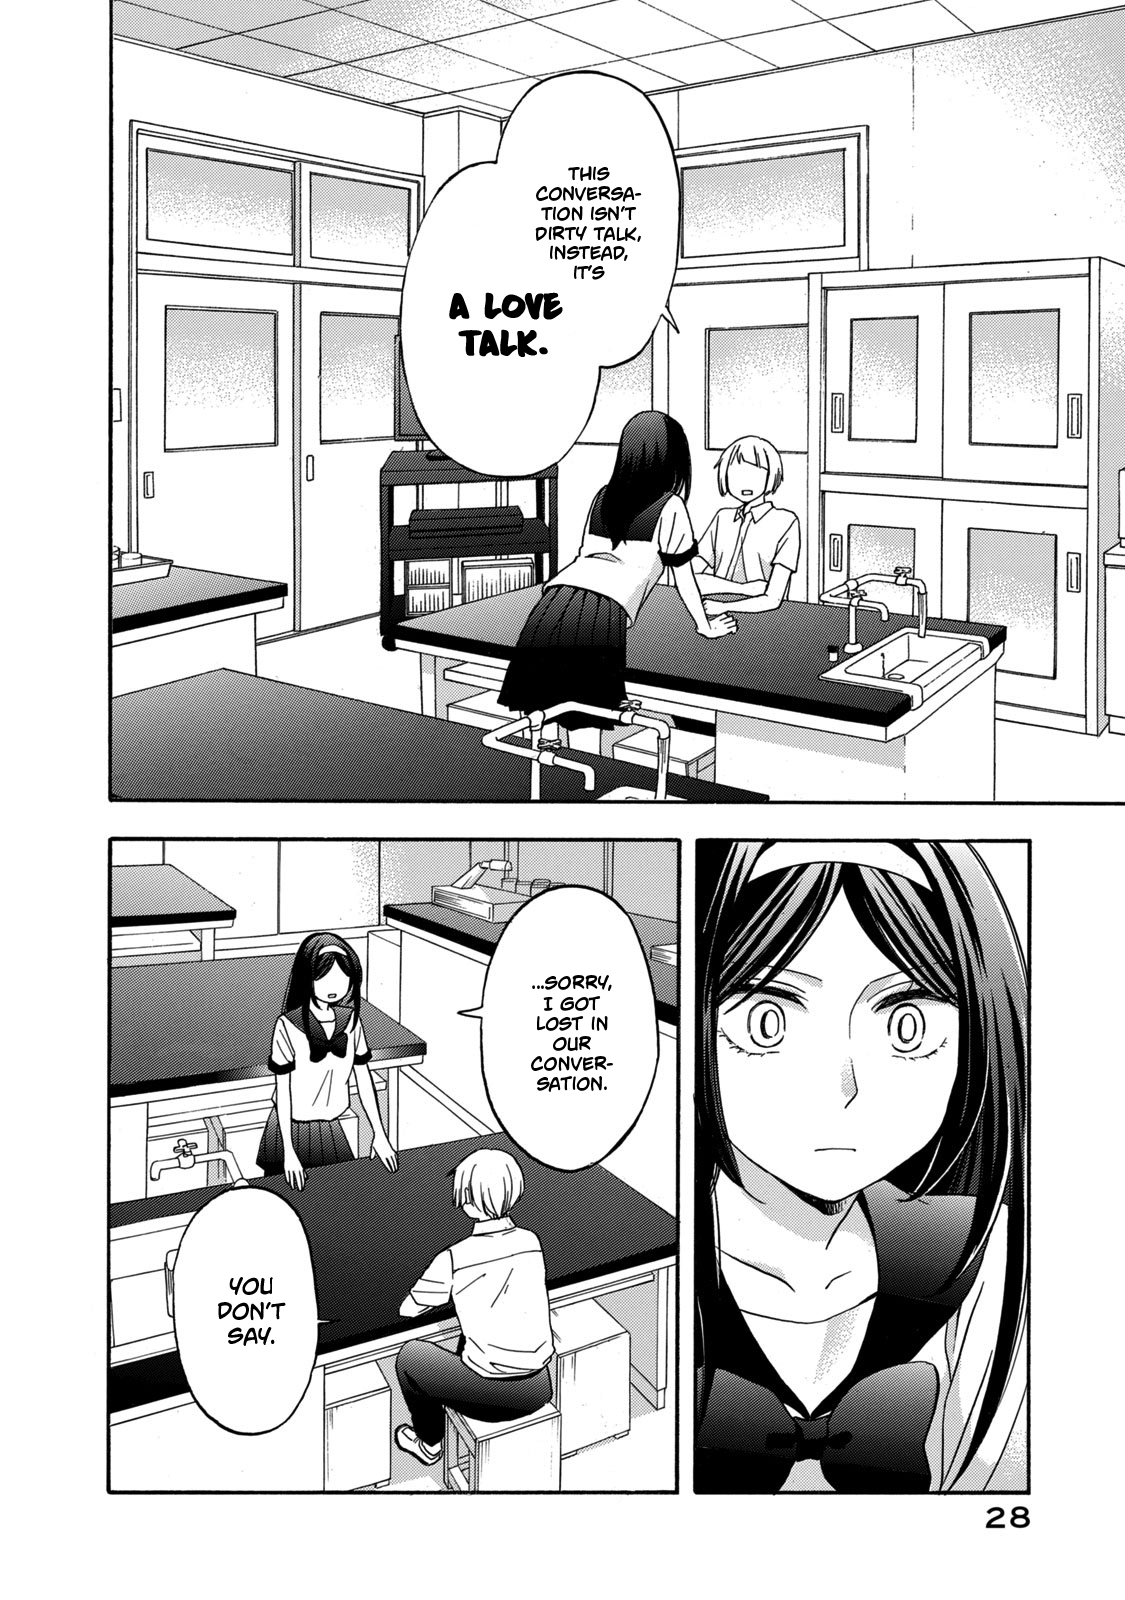 Hanazono and Kazoe's Bizarre After School Rendezvous Vol. 2 Ch. 10 Confusing Conversations